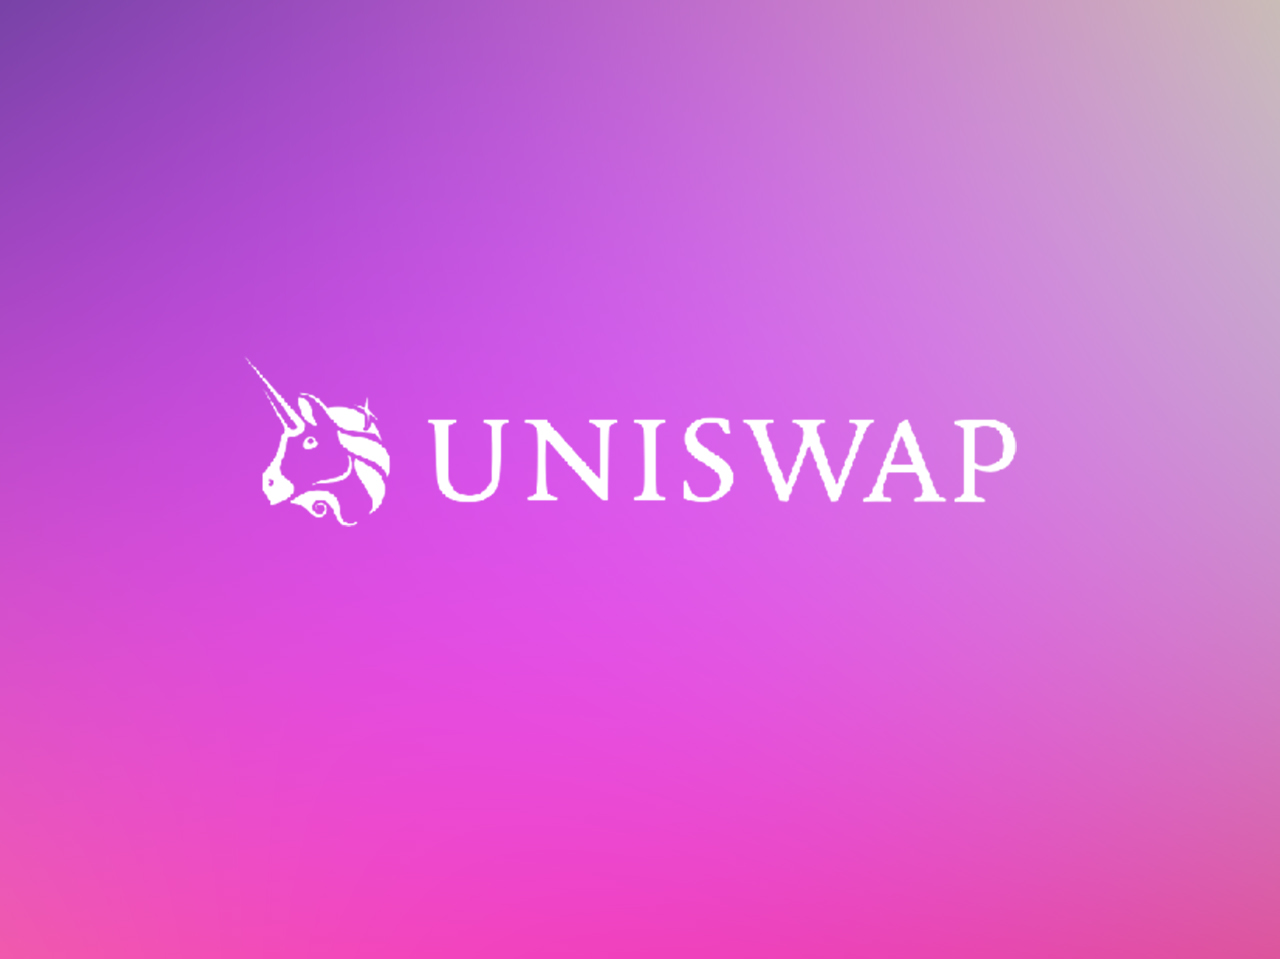 UniSwap: support The Merge - ETH chain split war is over?